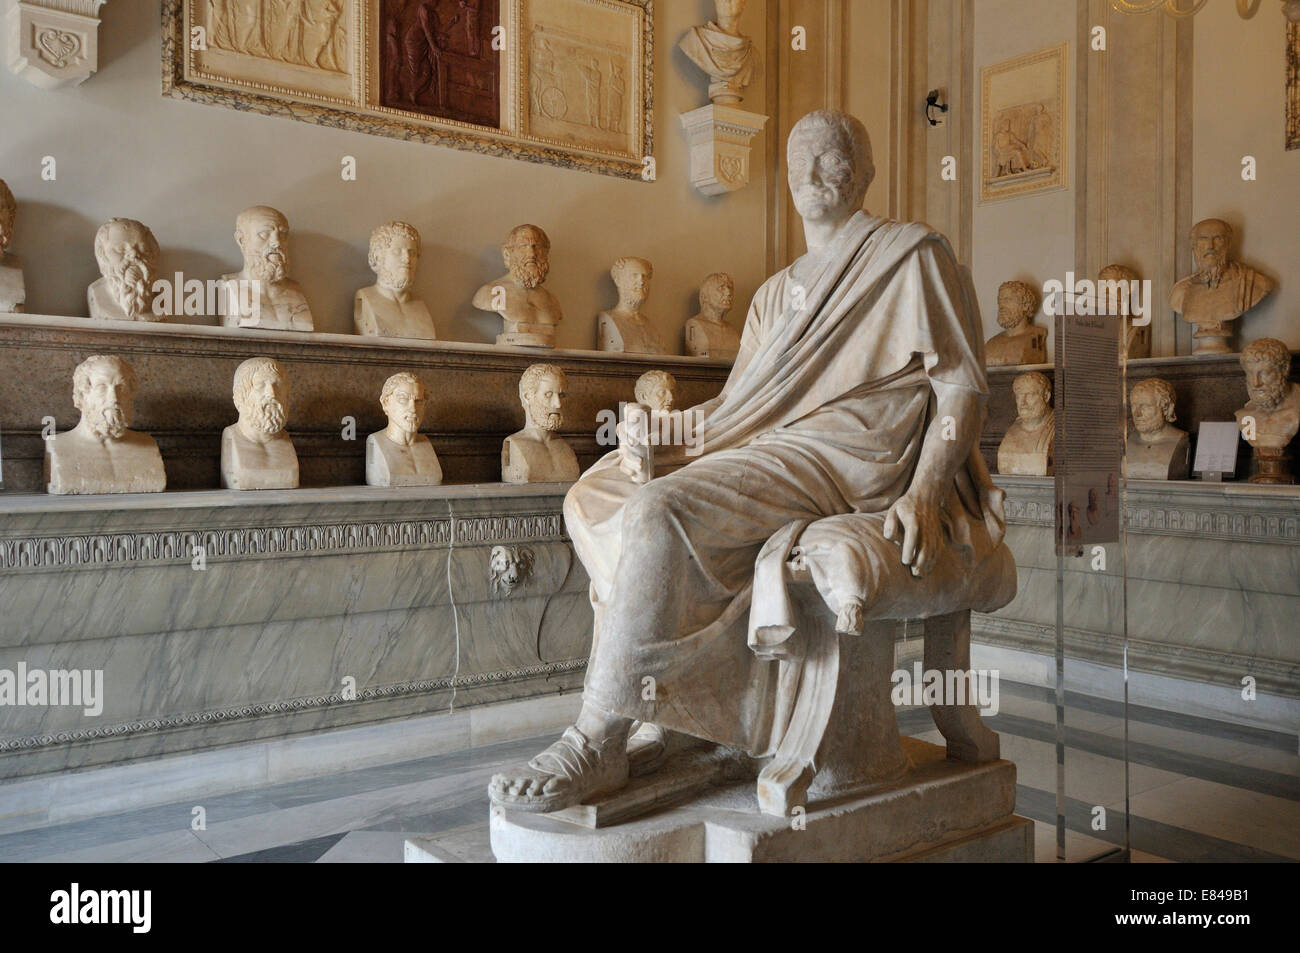 Capitoline Museums Musei Capitolini Rome Italy Hall of Philosophers Stock Photo